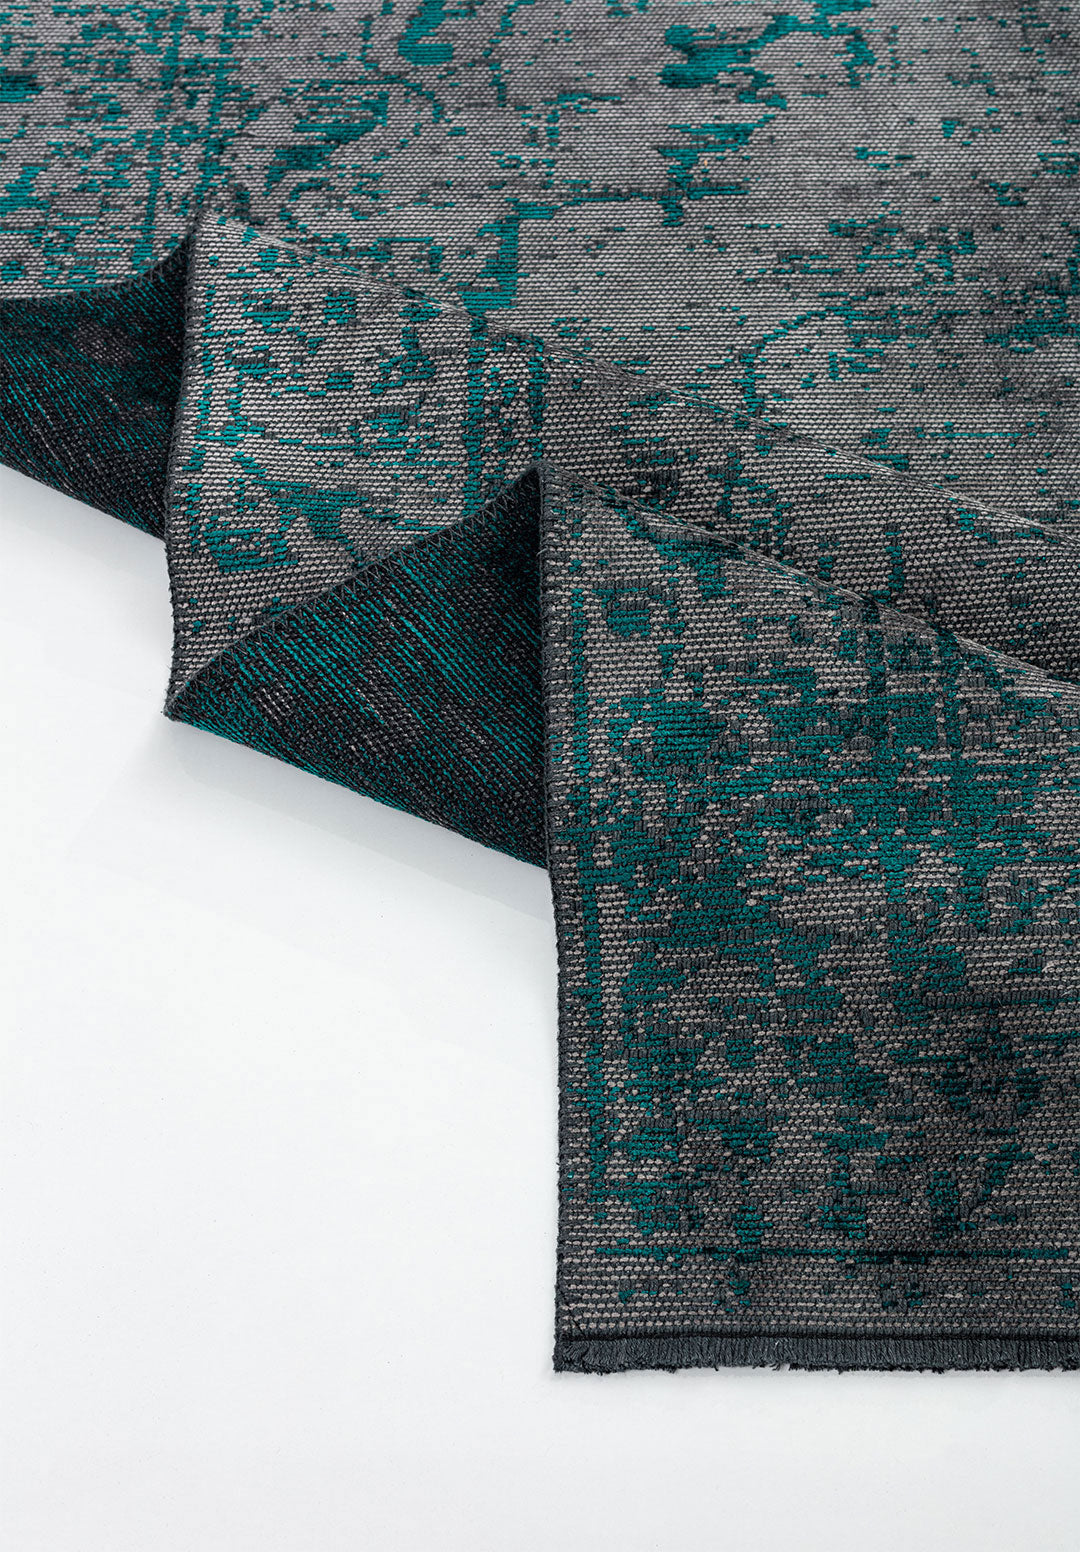 Ivy Grey - Dark Turquoise Rug Rugs - Venetto Design Venettodesign.com